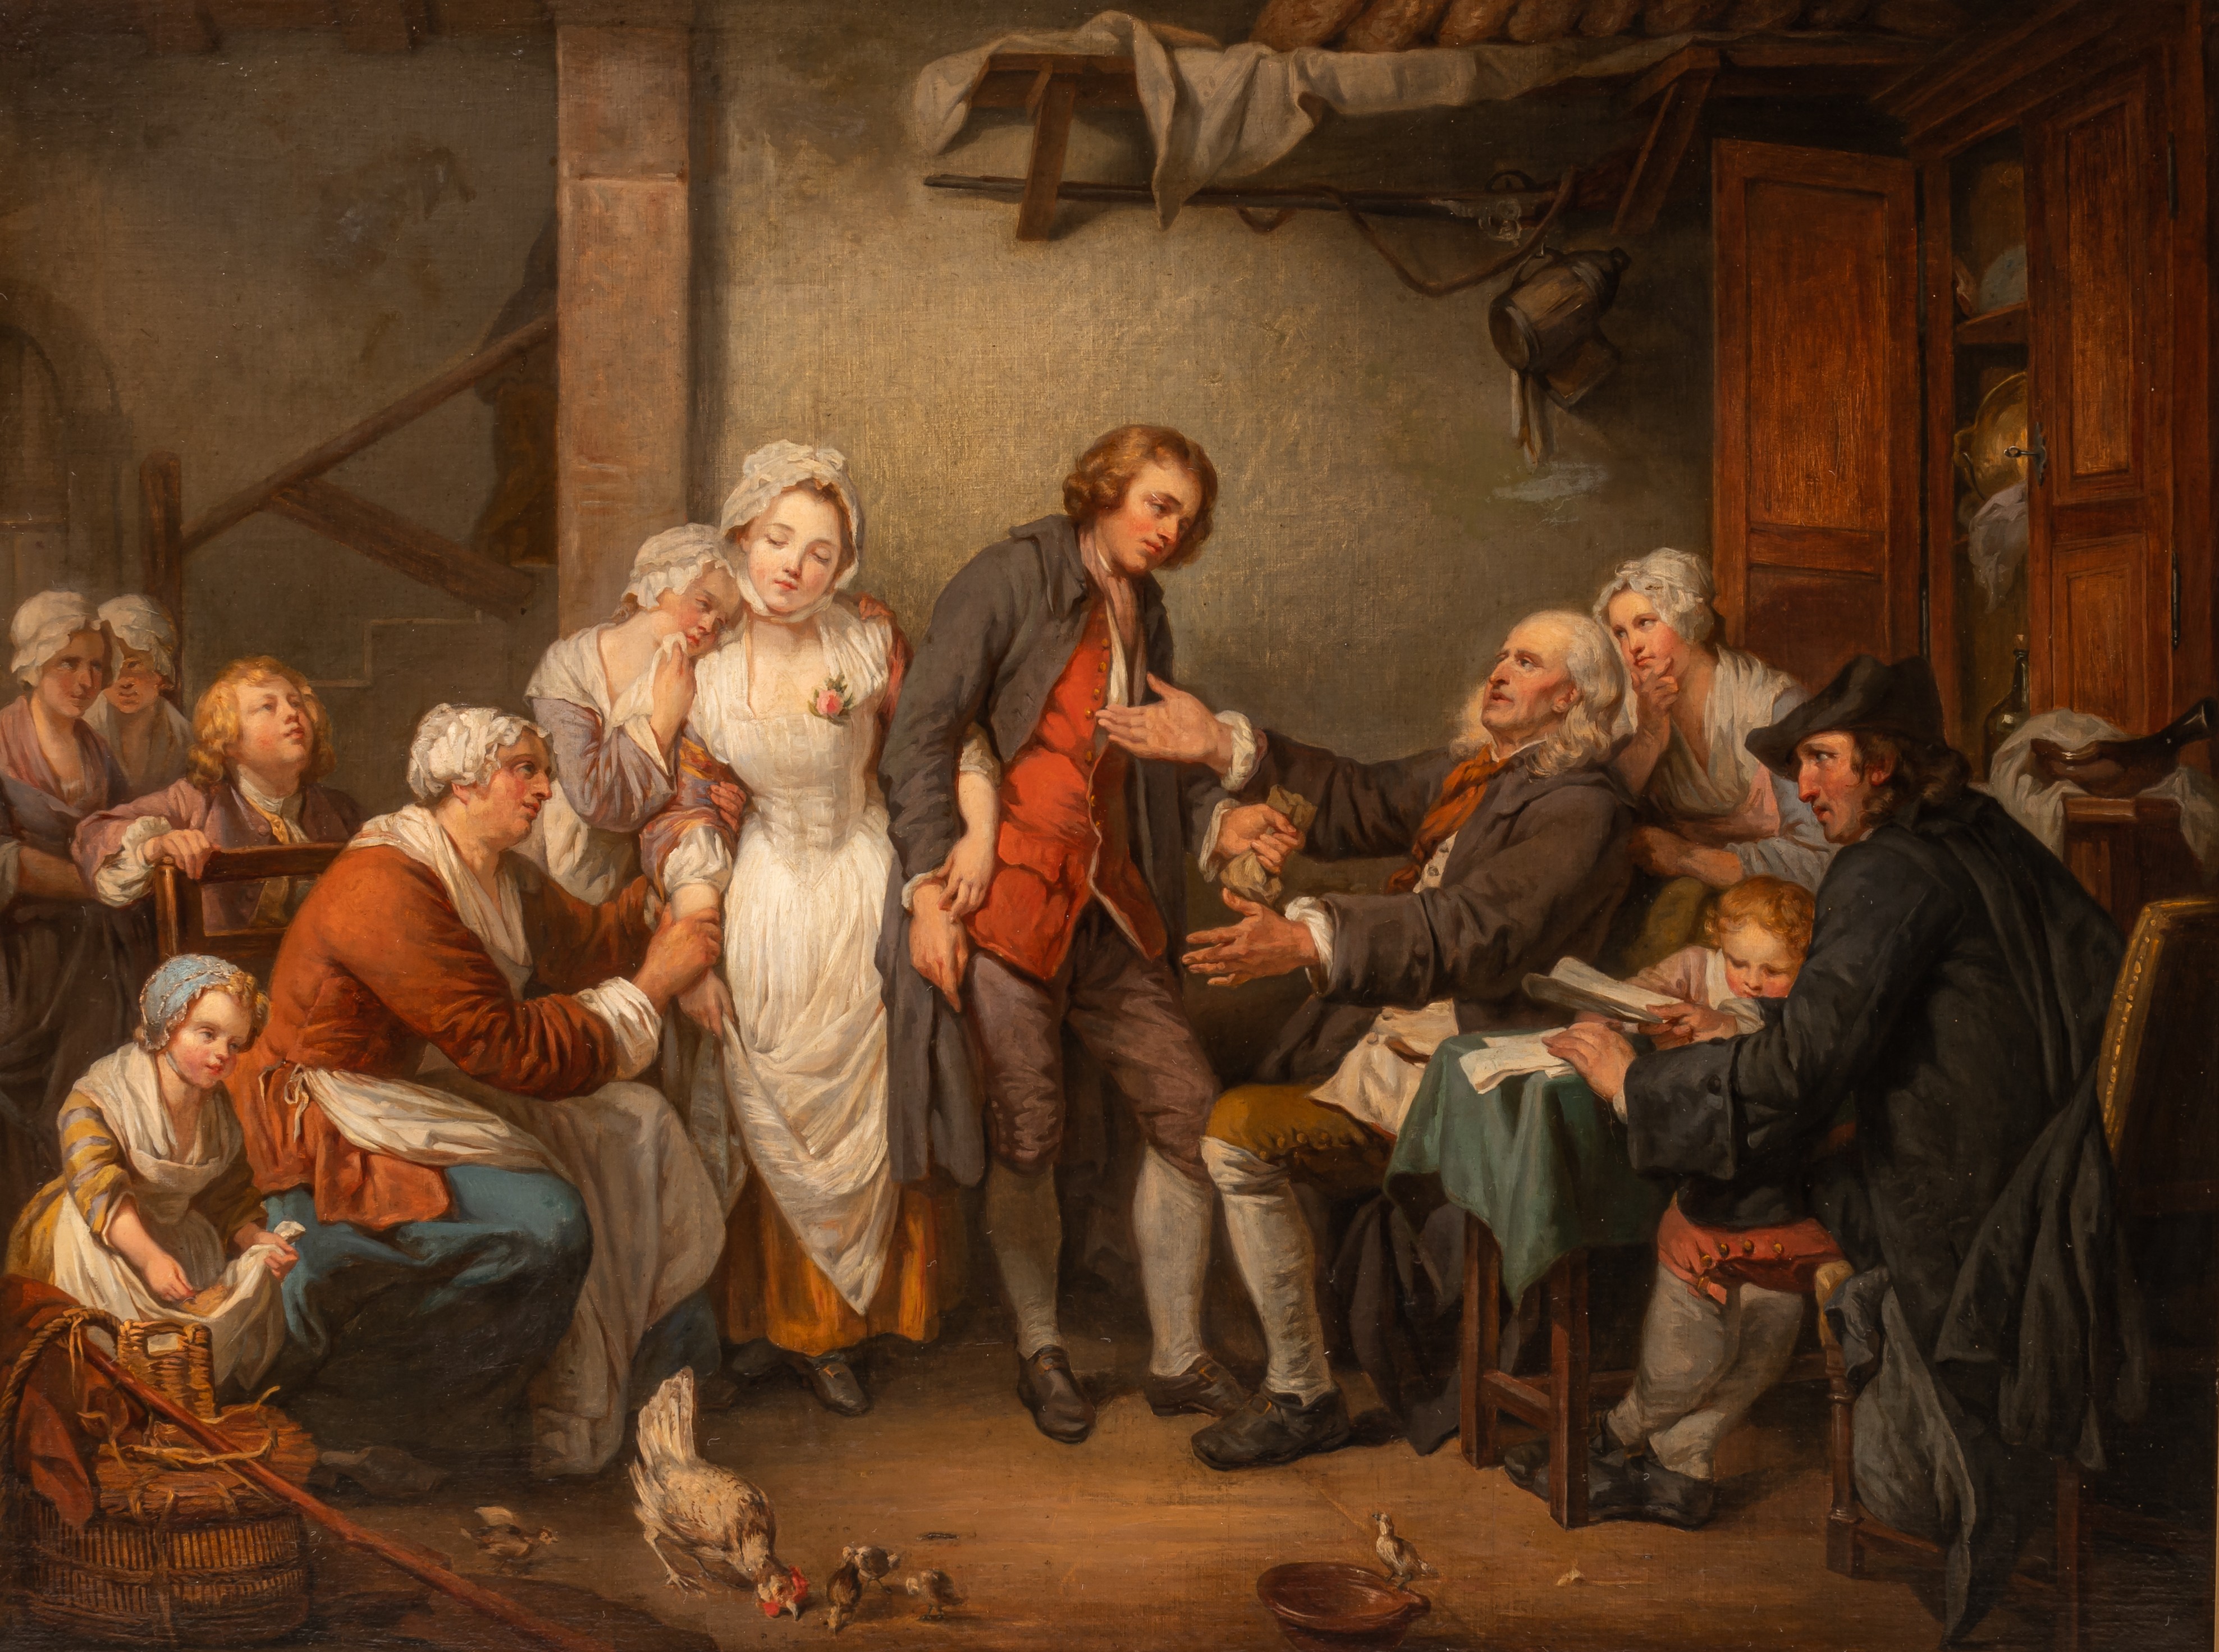 After Jean-Baptist Greuze (1725-1805), 'L'Accordee de village', oil on canvas 68 x 89 cm. (26.7 x 35